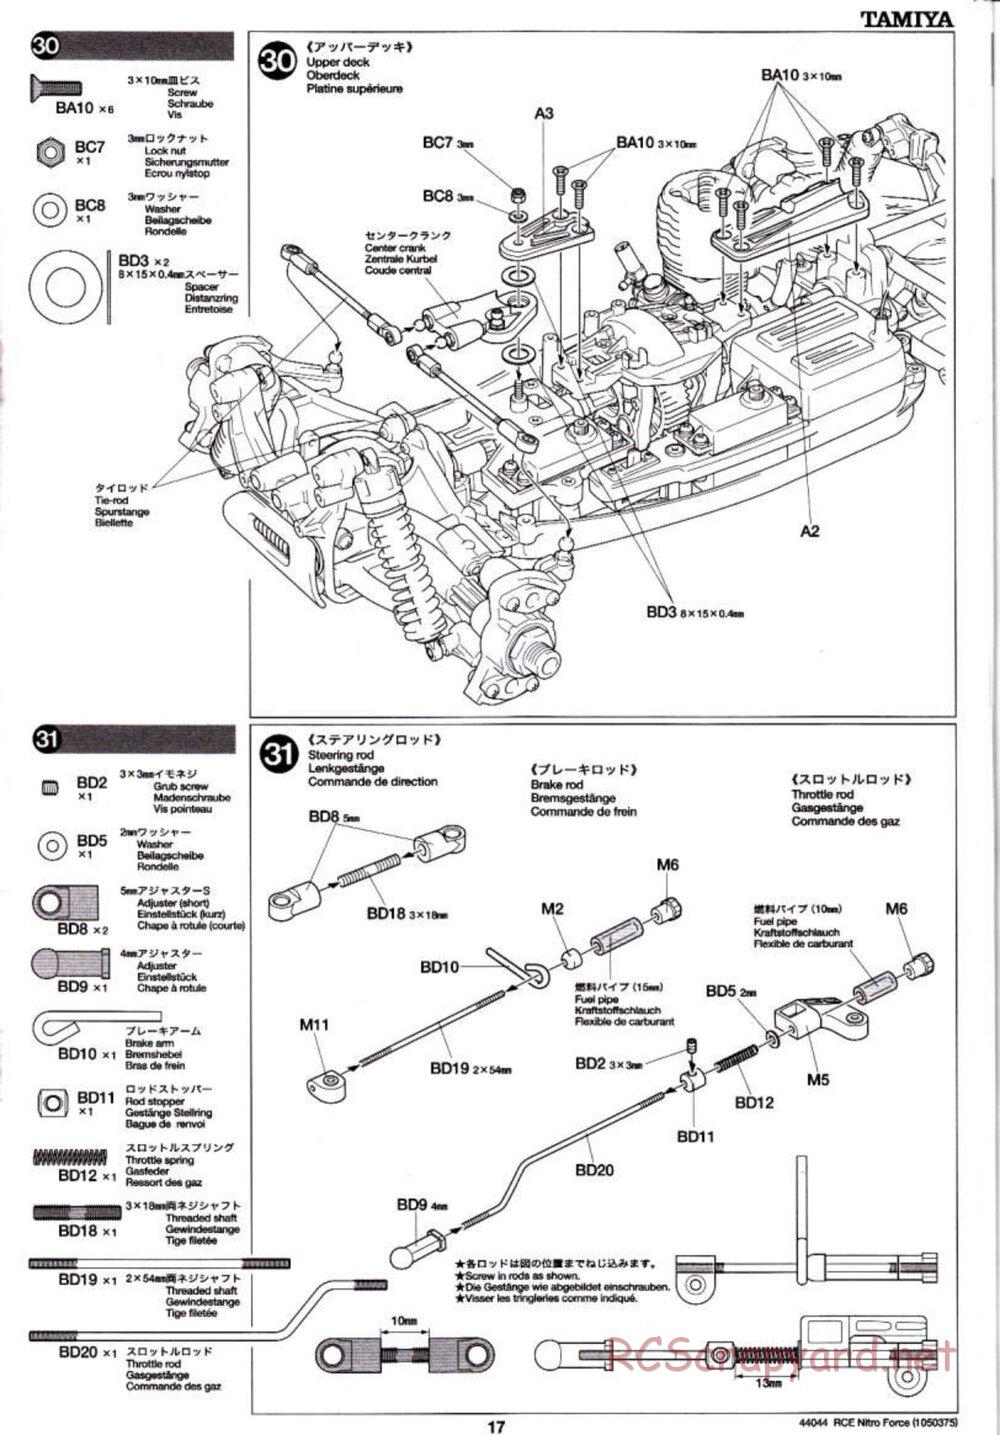 Tamiya - Nitro Force - NDF-01 Chassis - Manual - Page 17